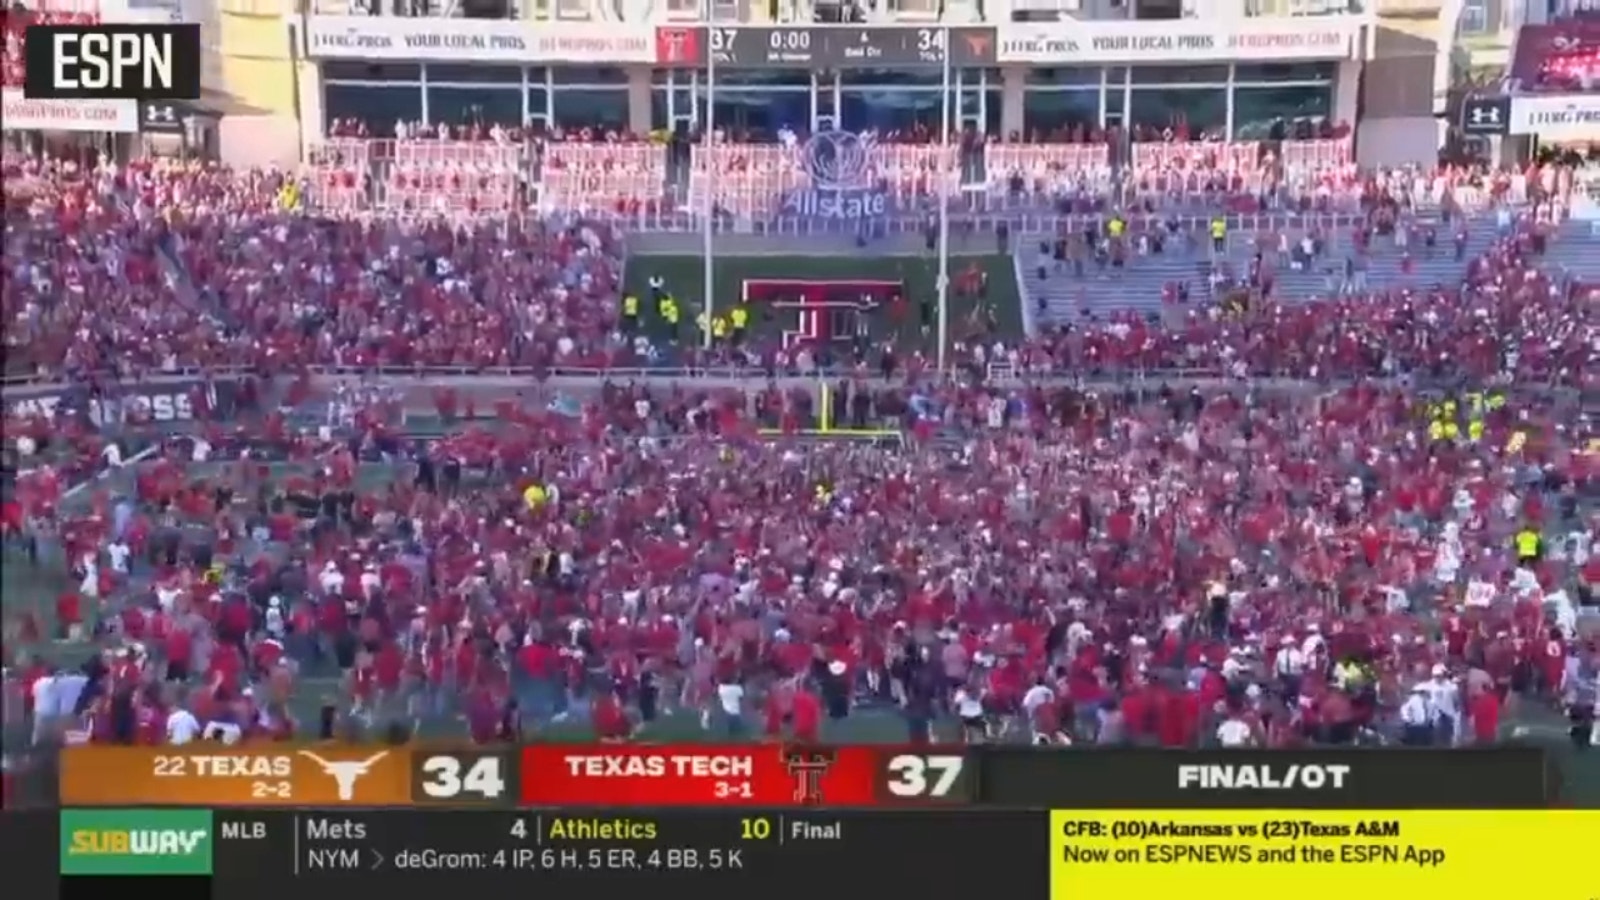 Fans RUSH the field after Texas Tech's upset of Texas